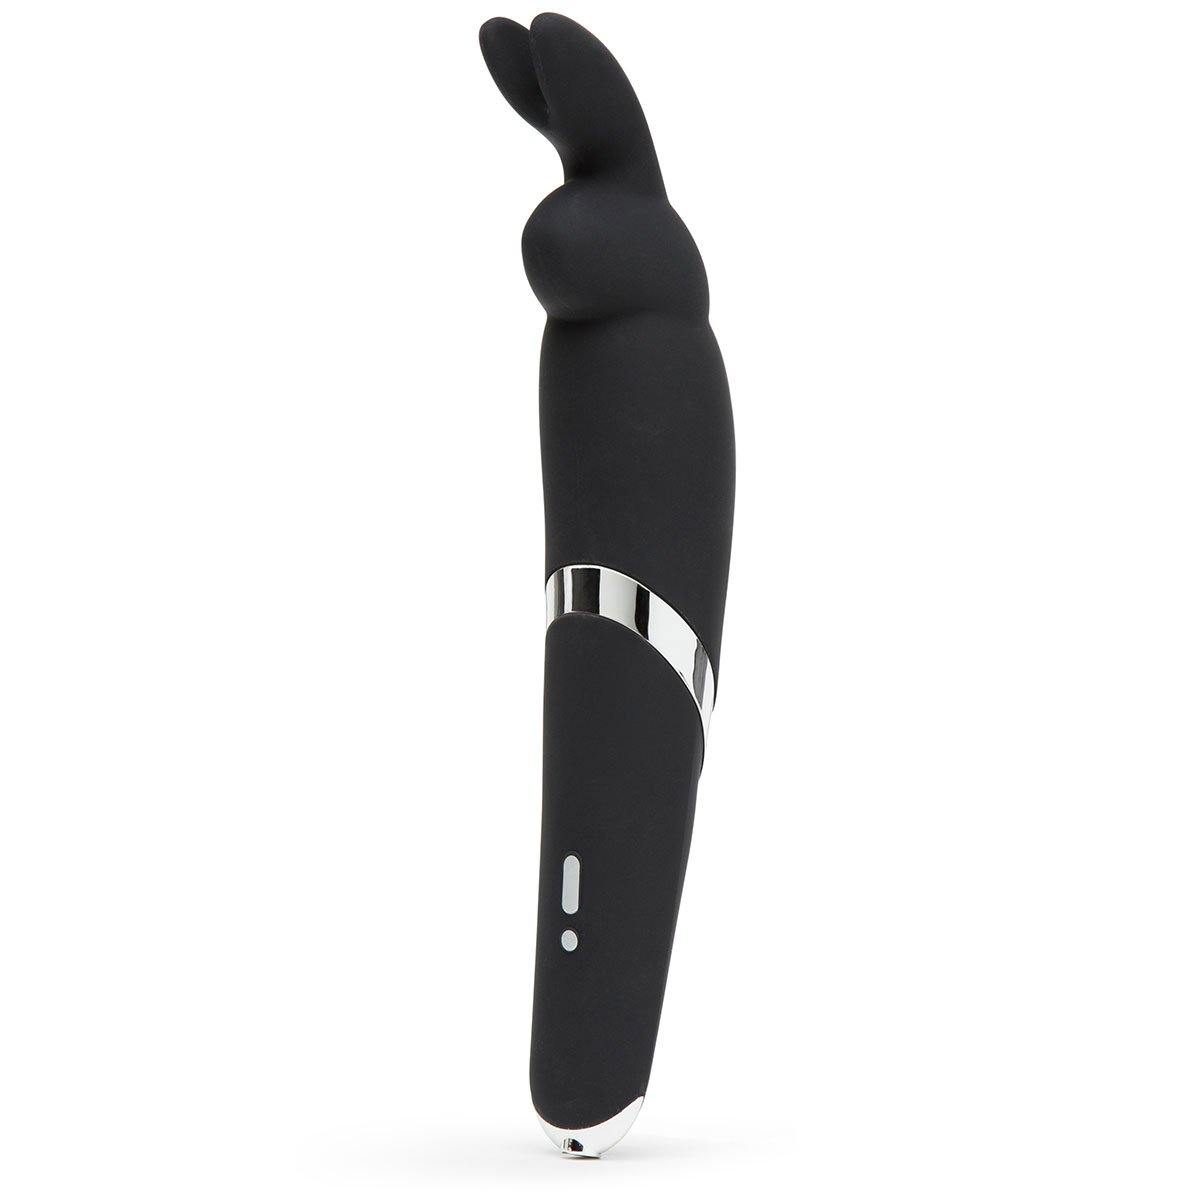 Happy Rabbit Wand Vibrator - Black - Buy At Luxury Toy X - Free 3-Day Shipping